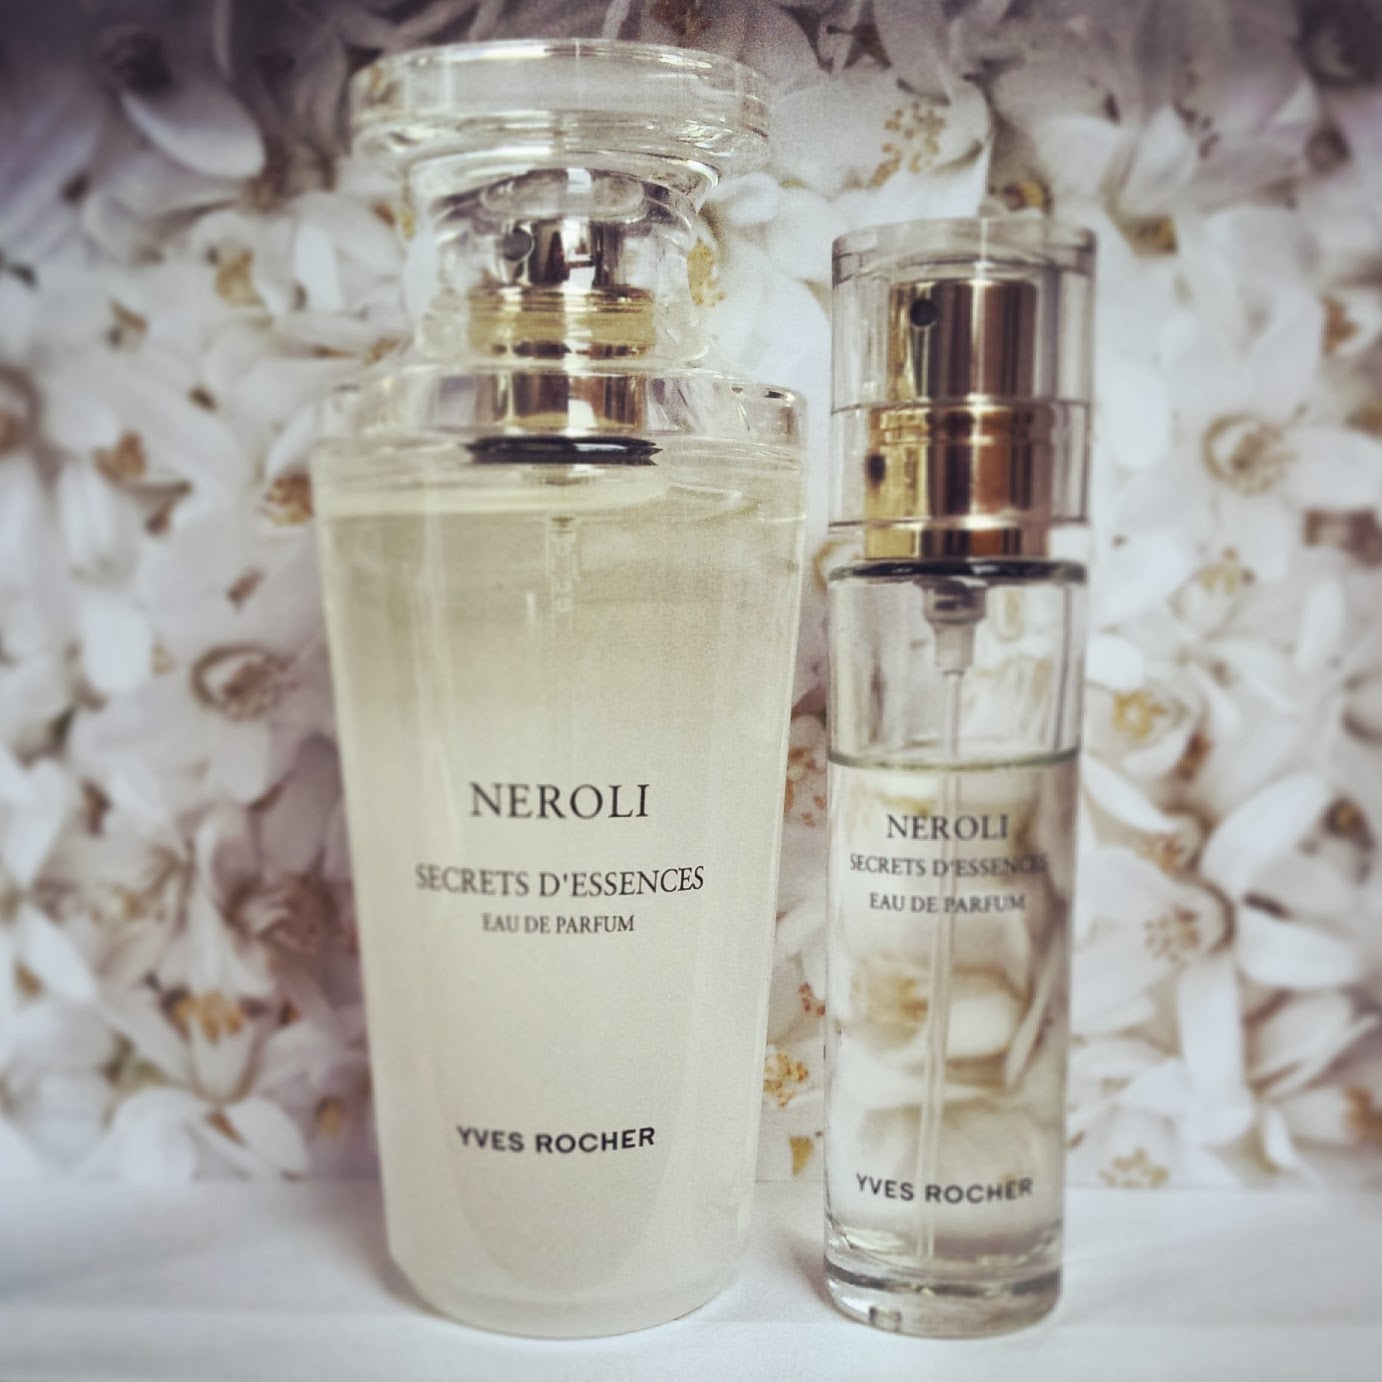 Rituals Perfume ORIENTAL ESSENCES COLLECTION Rose de Shiraz & L'Essence SET  RARE